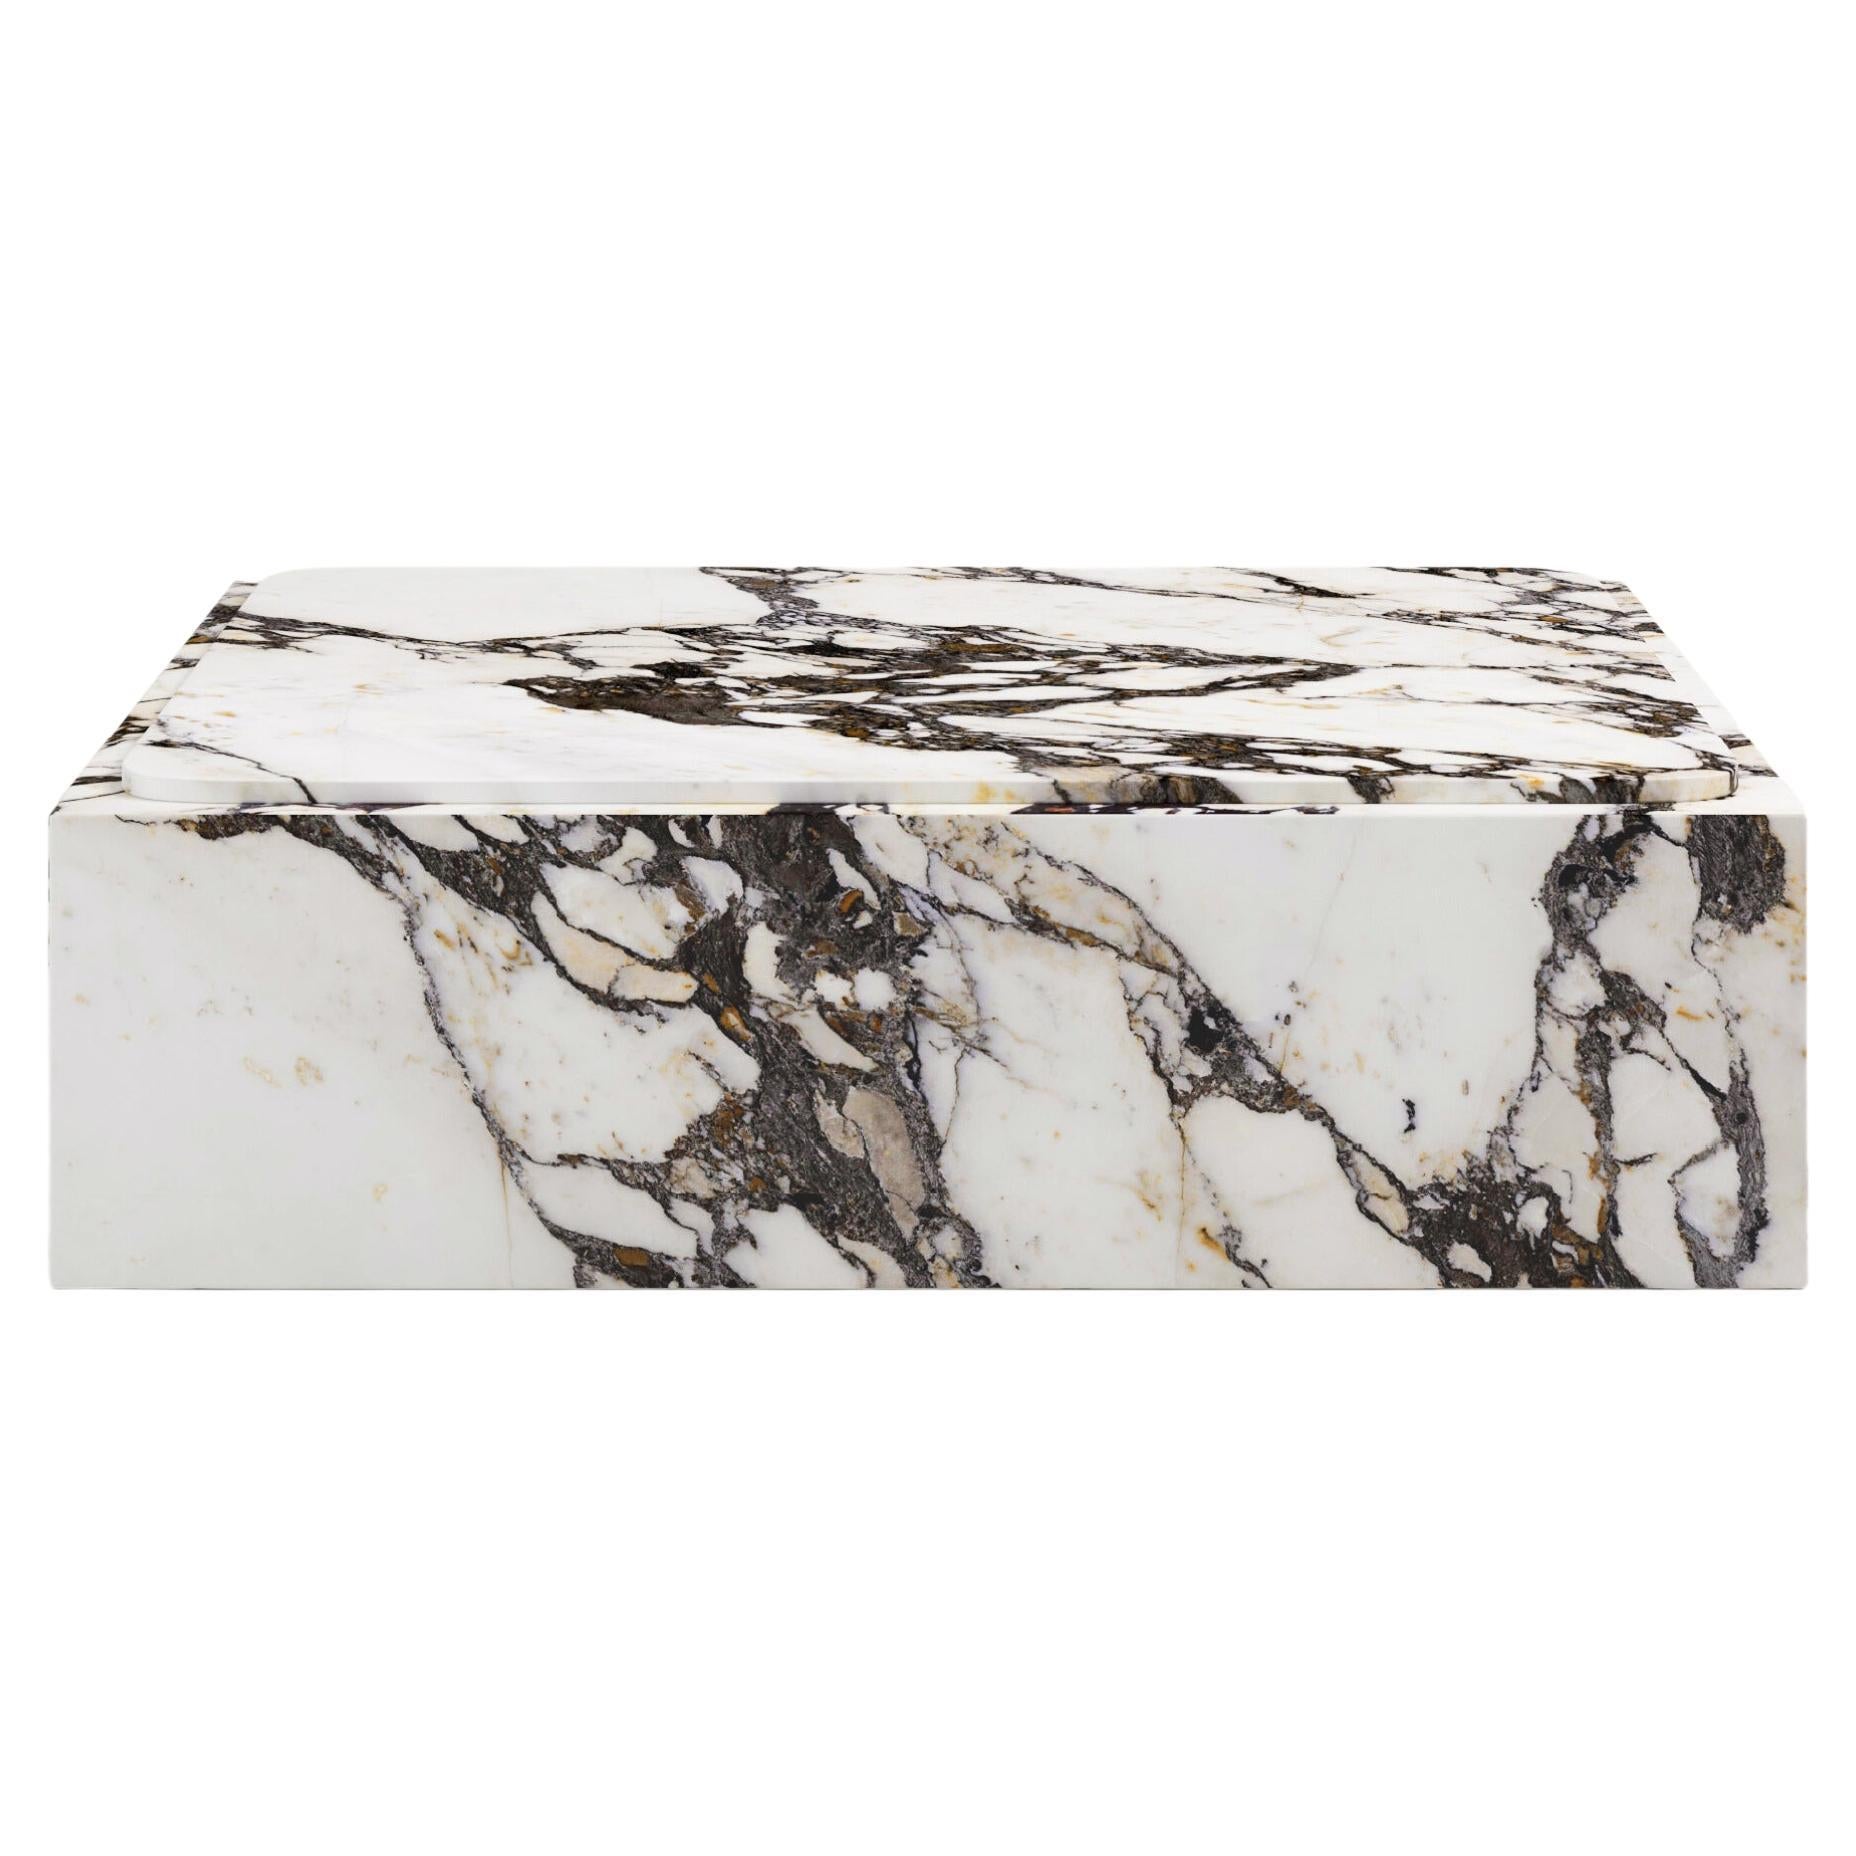 FORM(LA) Cubo Square Plinth Coffee Table 54”L x 54”W x 13”H Calacatta Marble For Sale